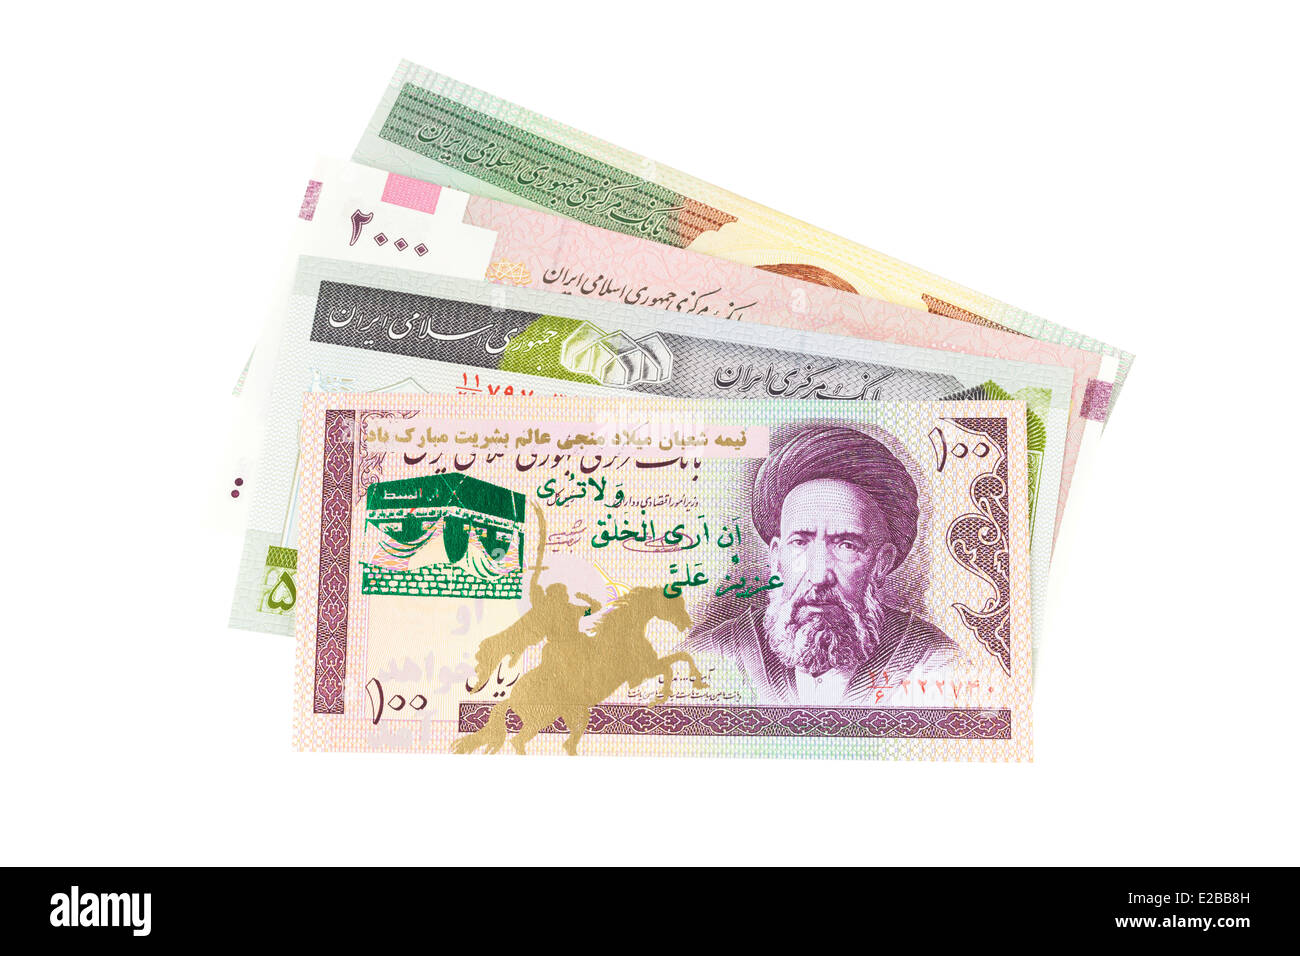 Iranian banknotes in various denominations Stock Photo